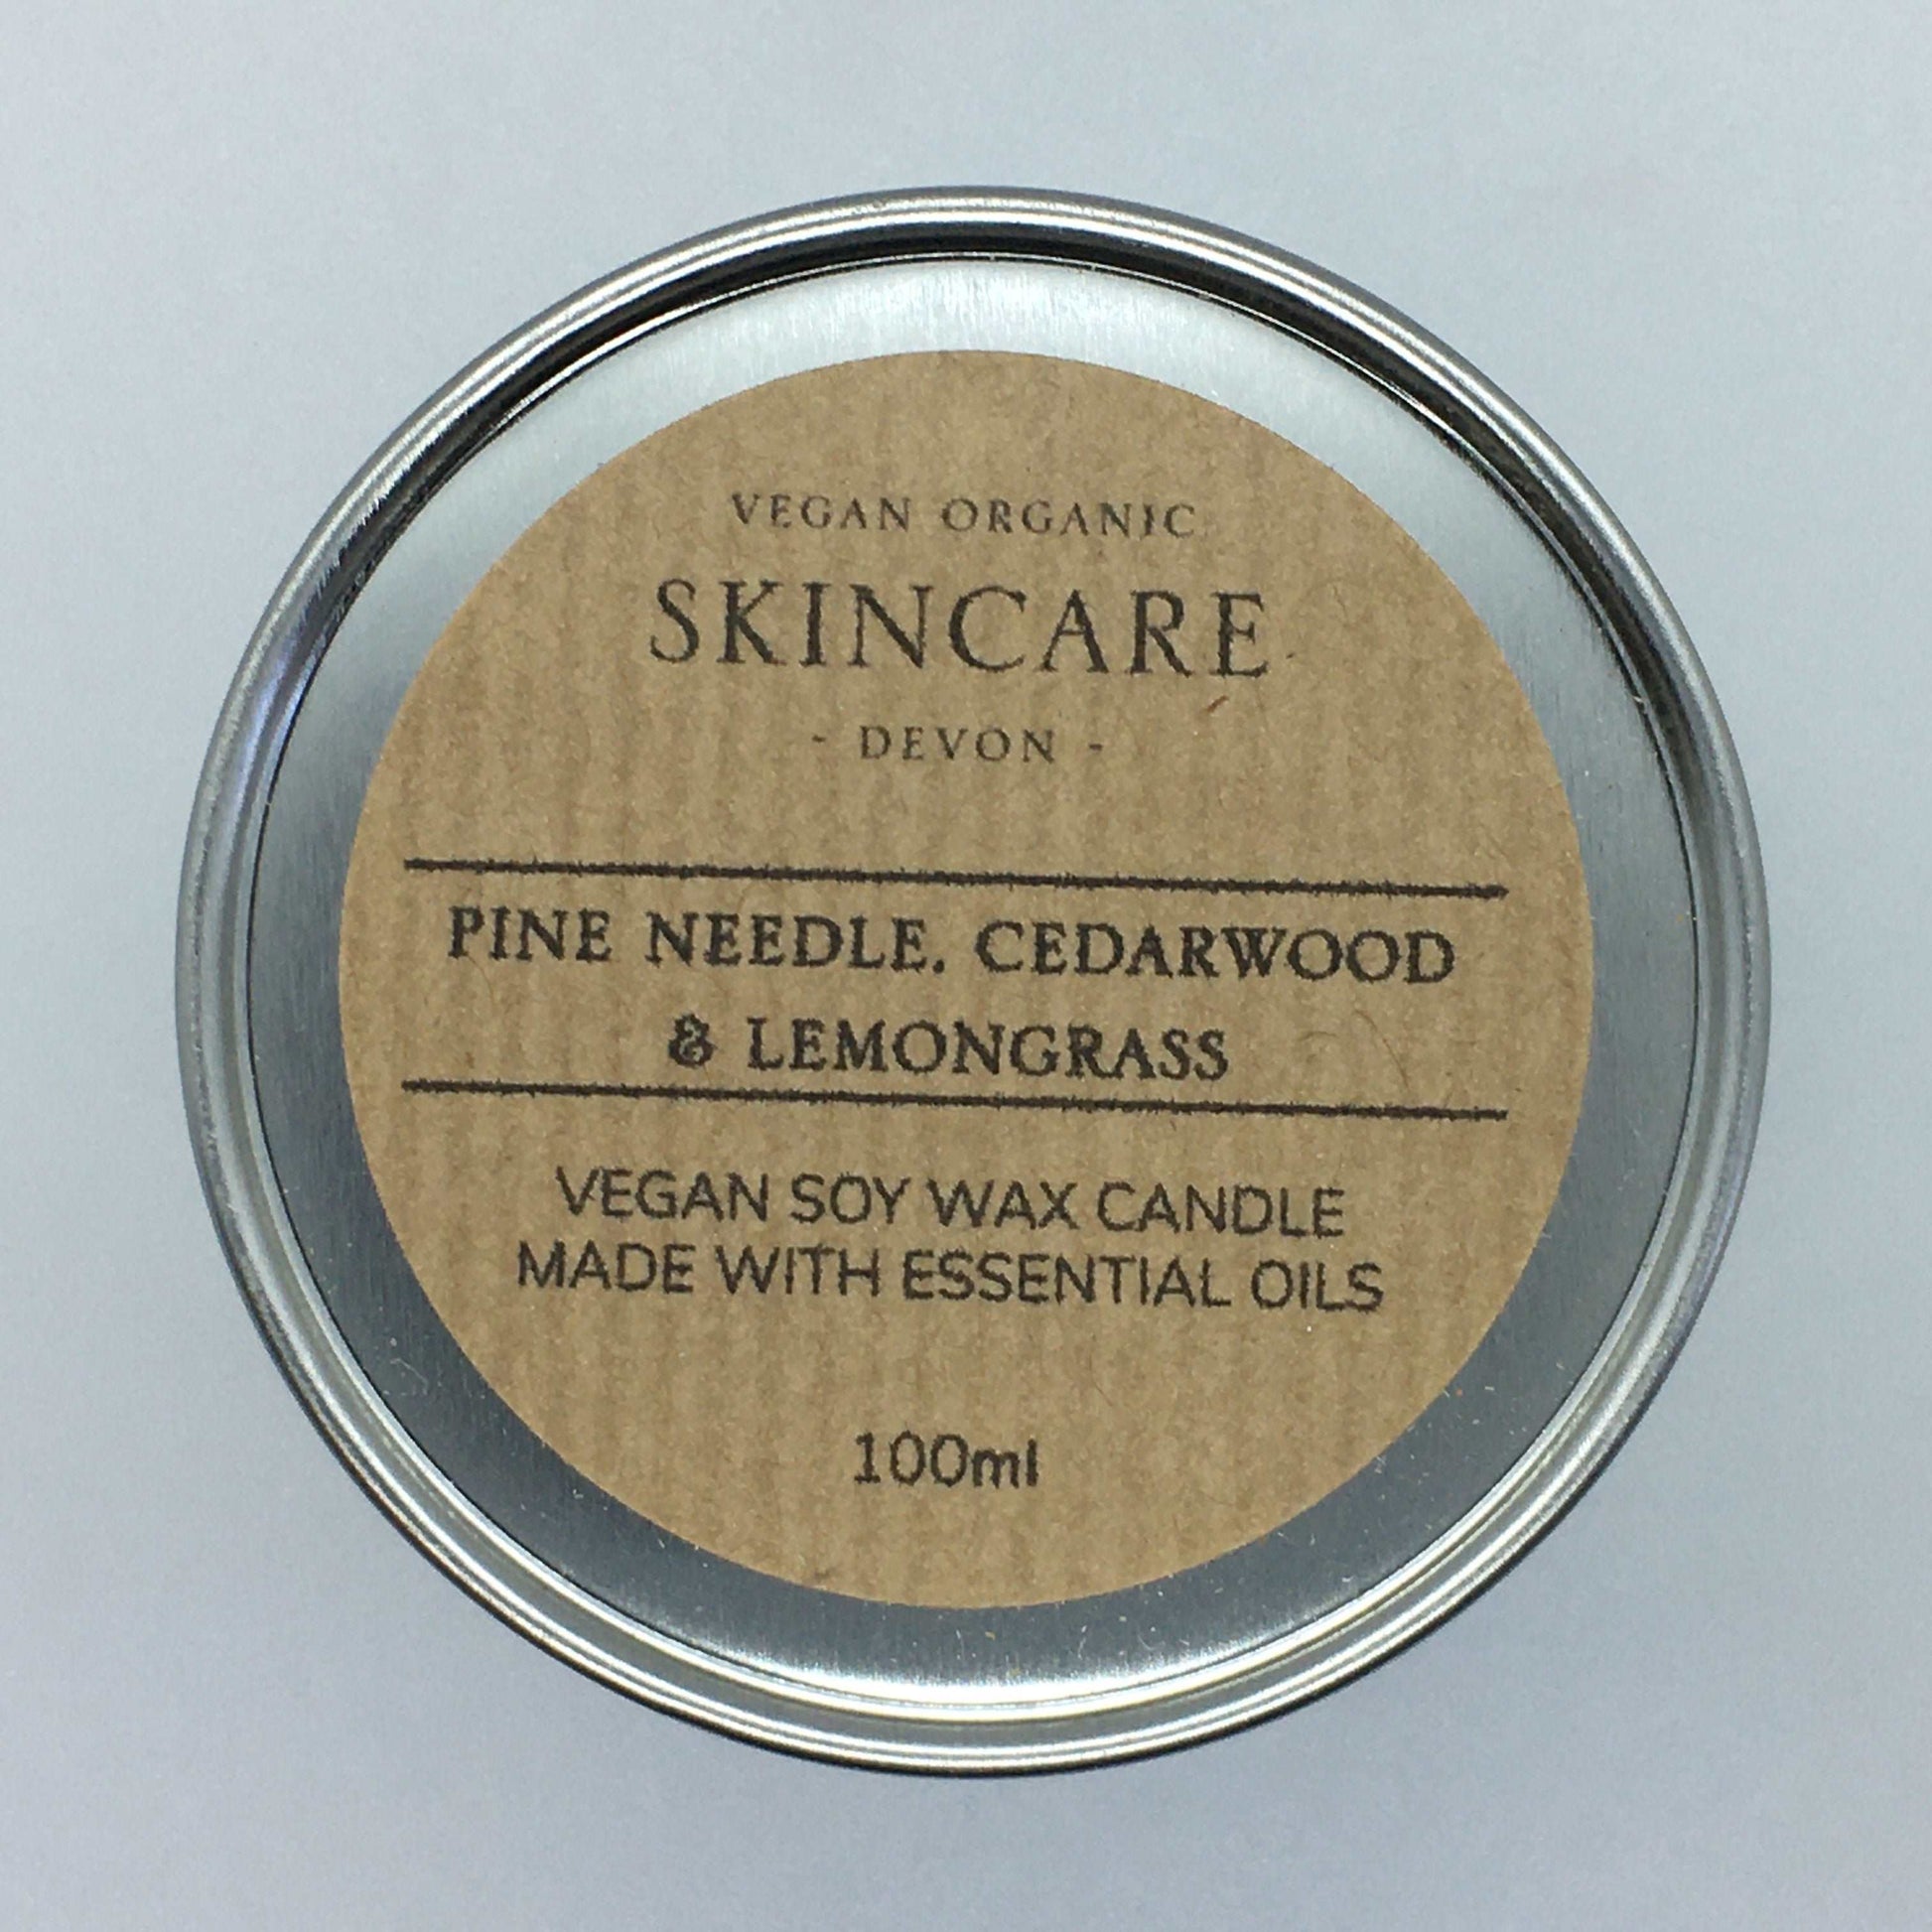 Pine Needle, Cedarwood & Lemongrass Aromatherapy Candle